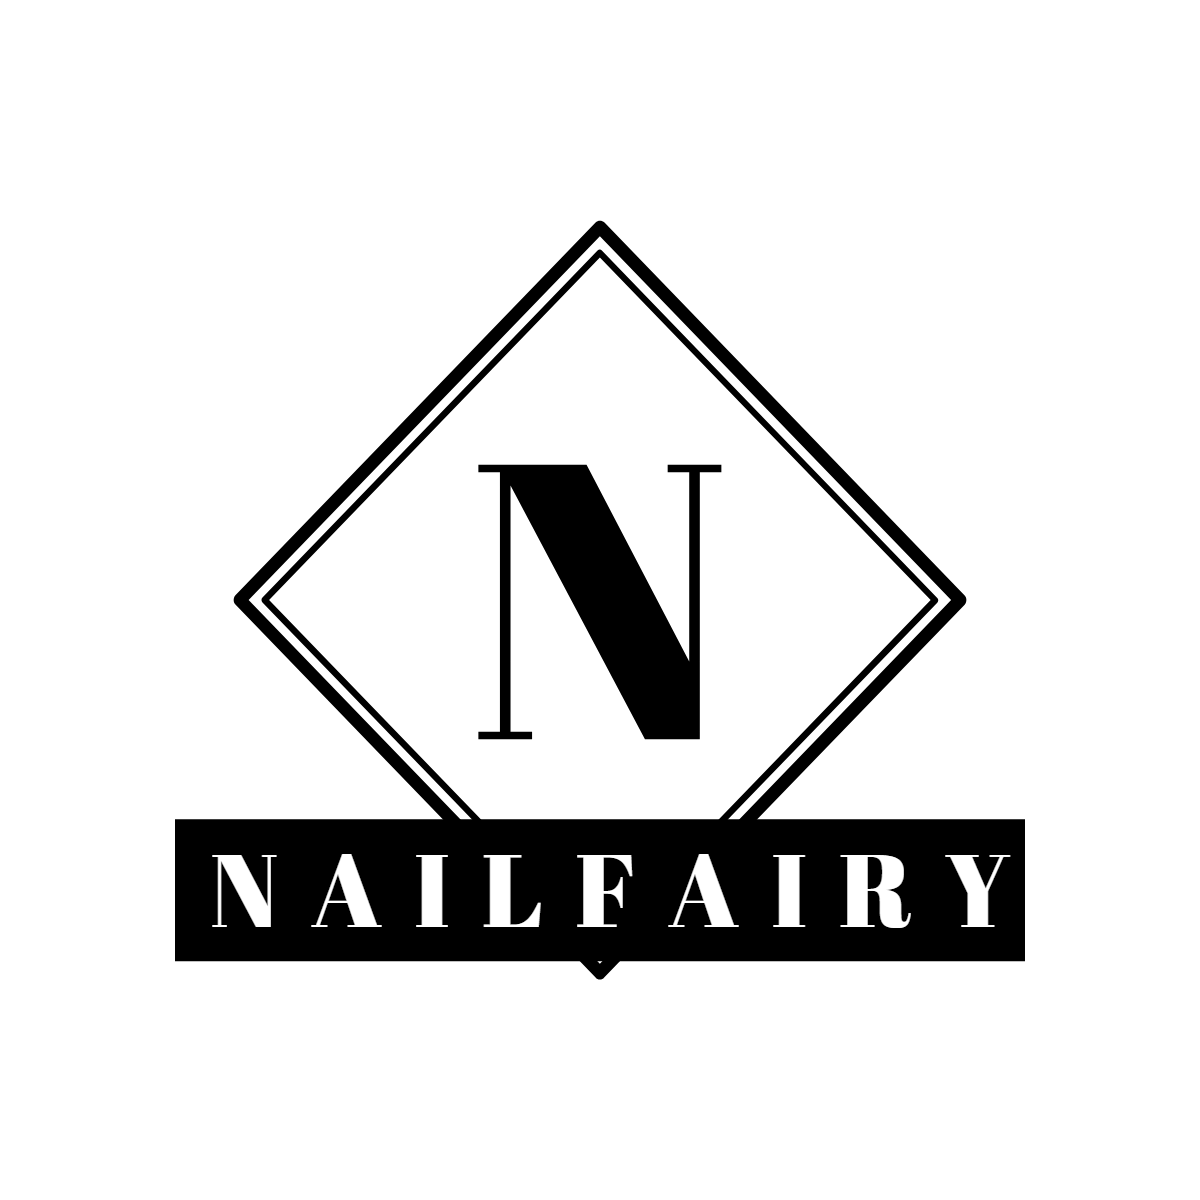 Nailfairy template logo